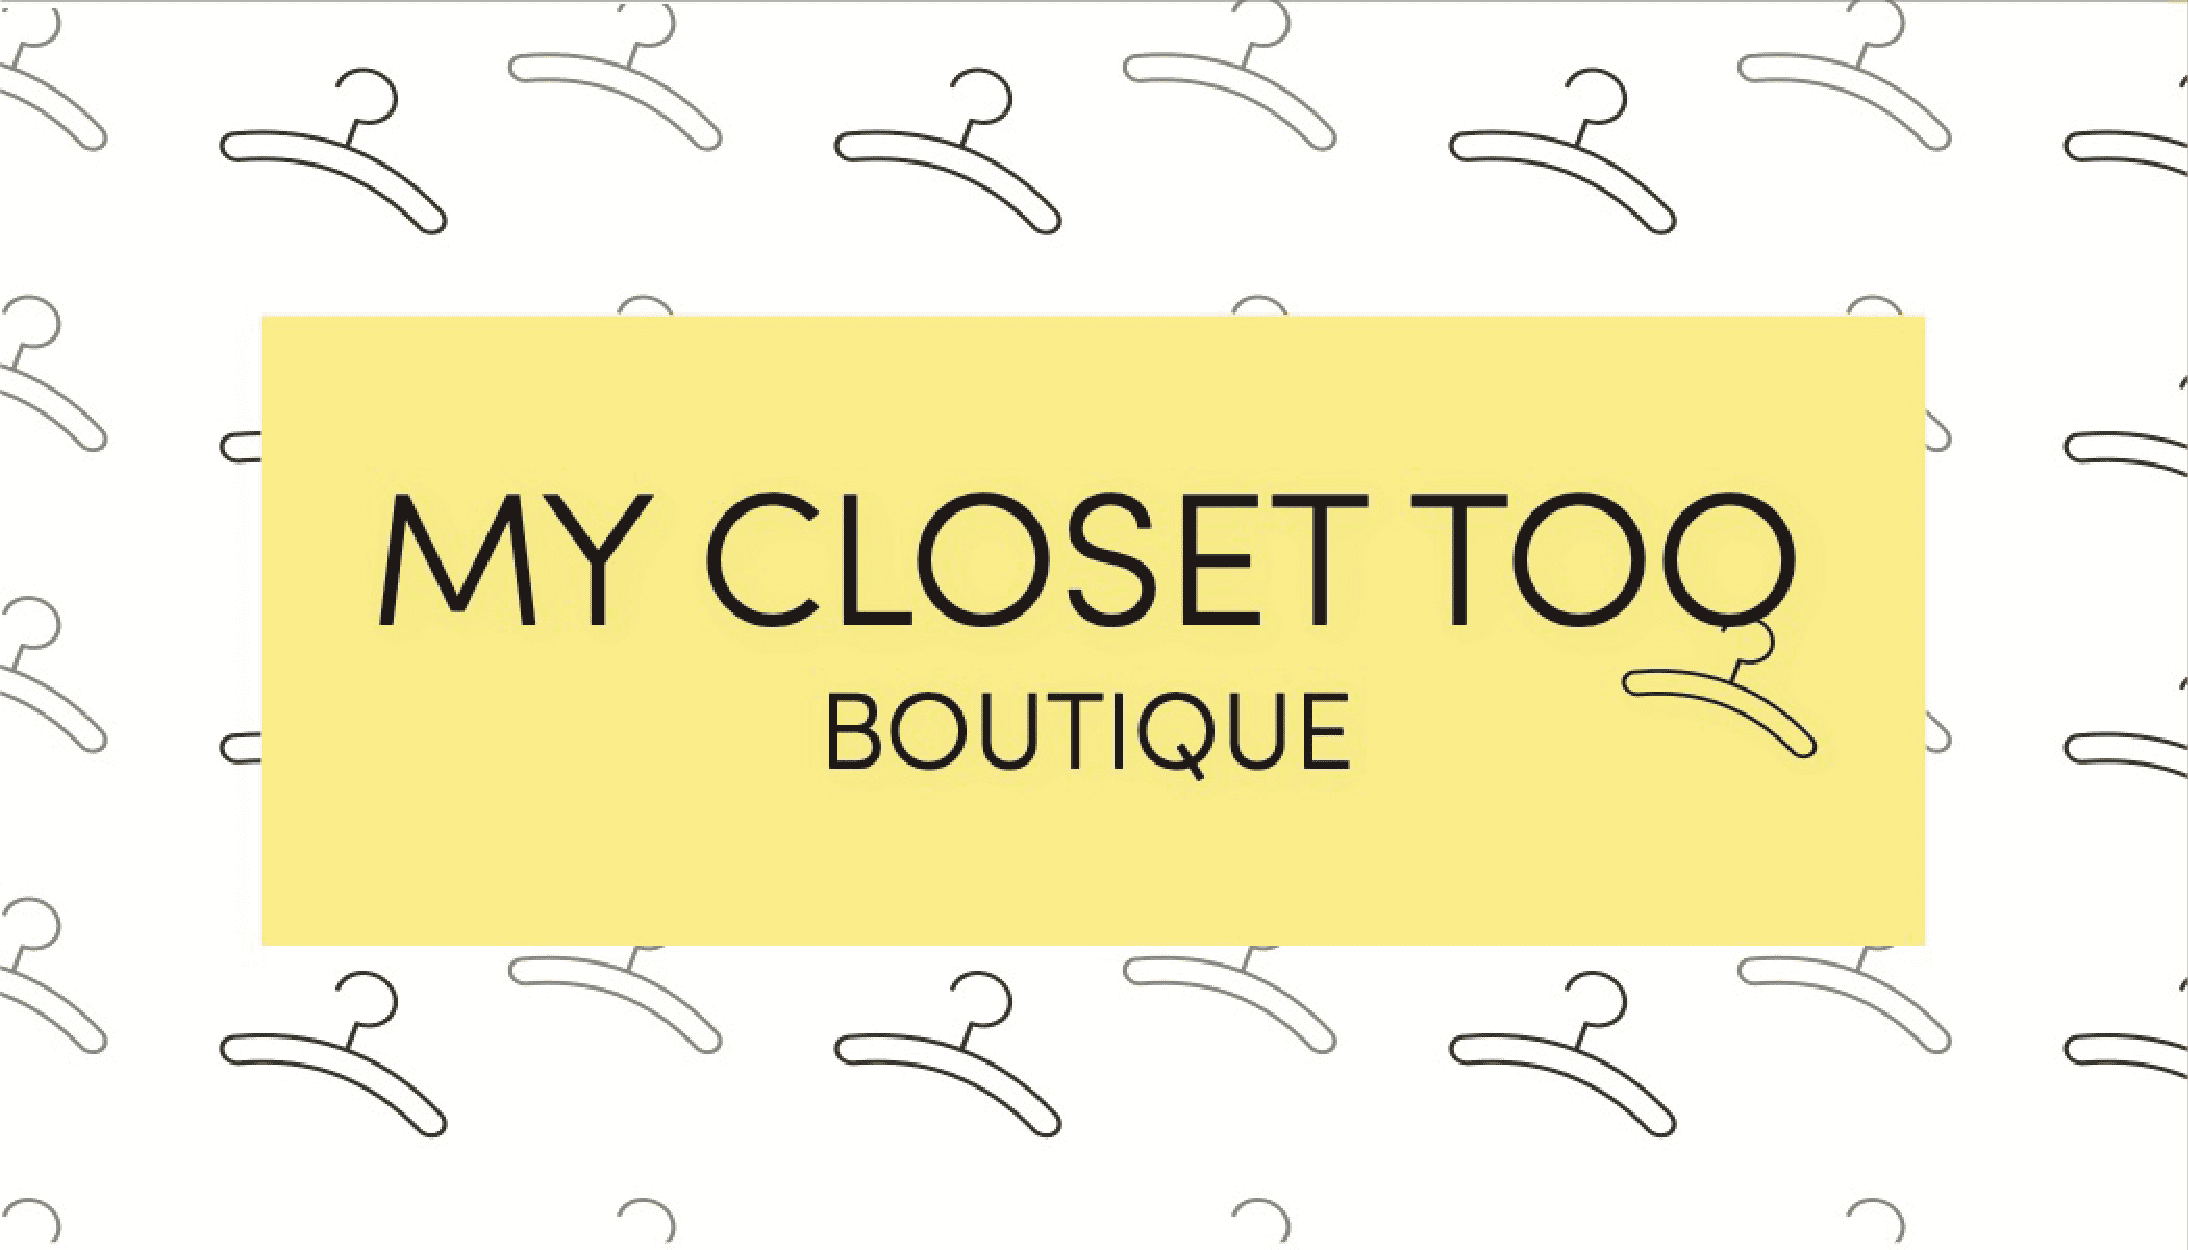 My Closet Too business card design